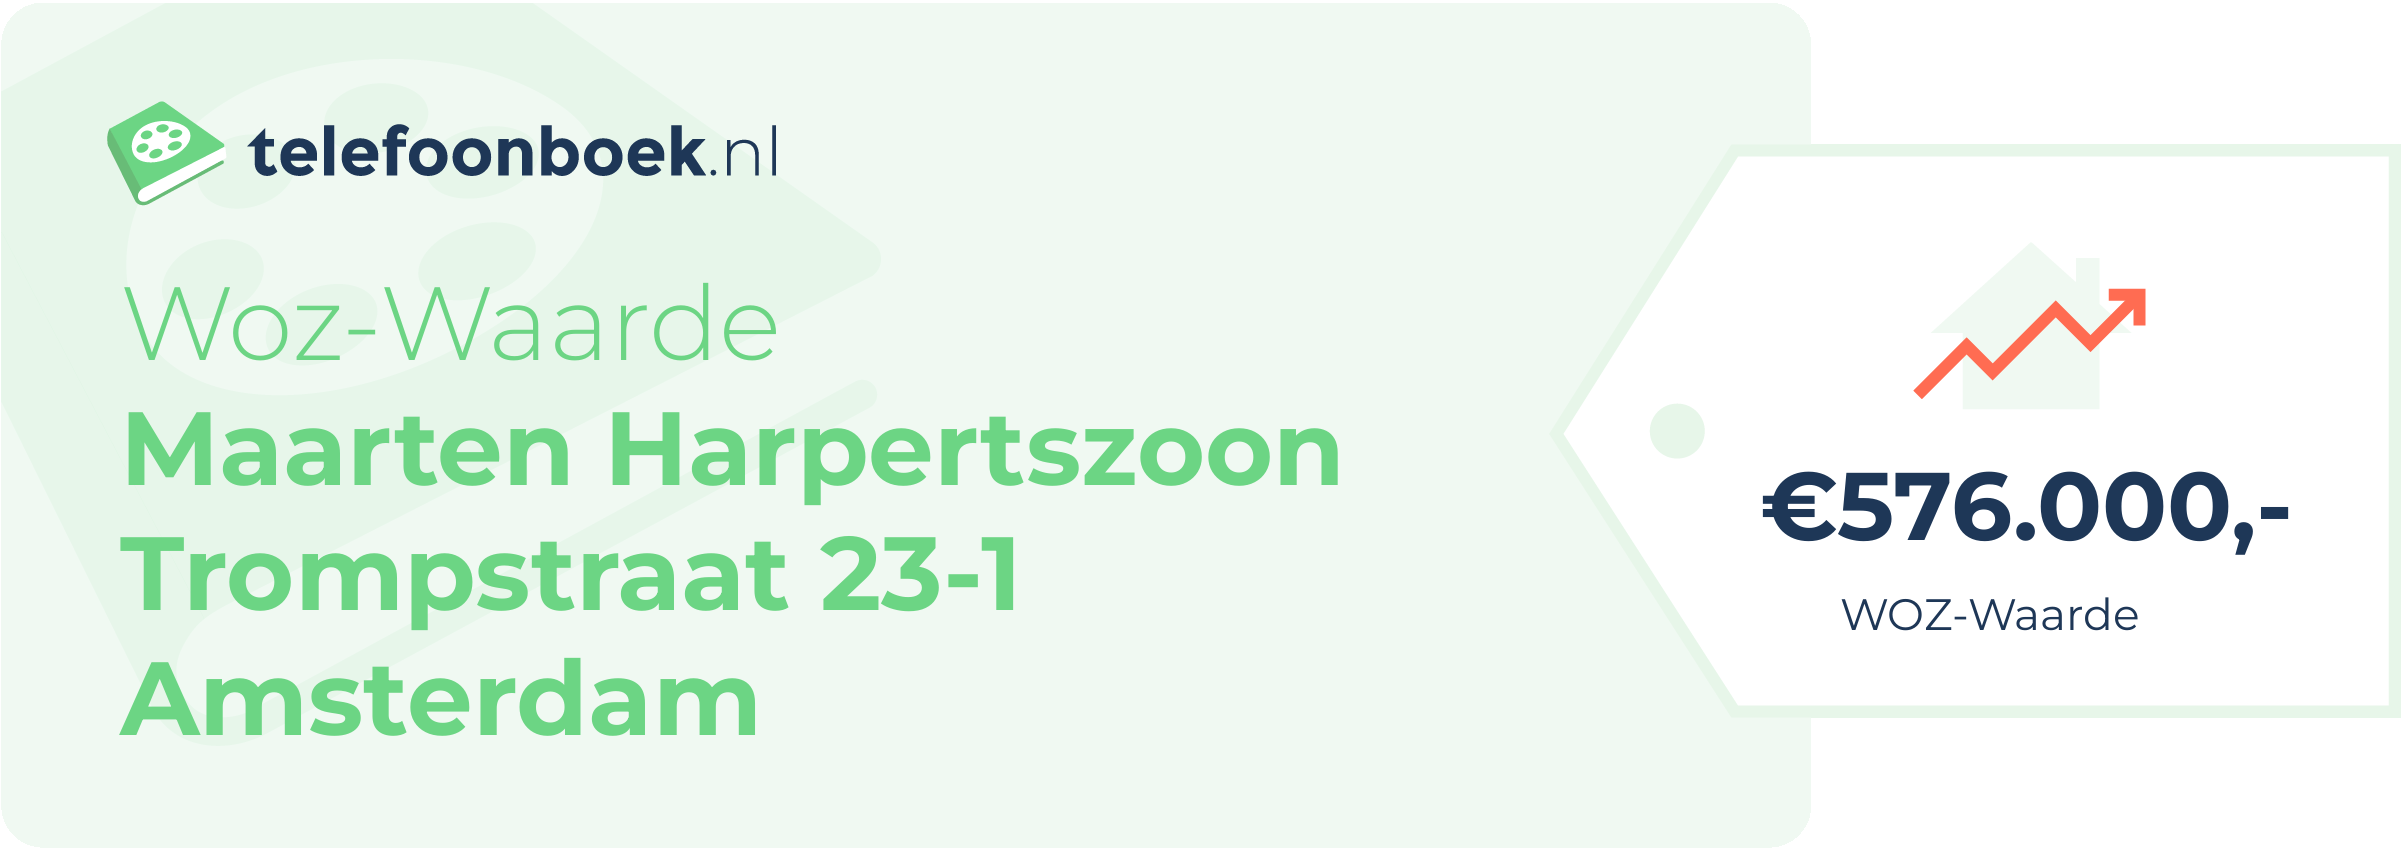 WOZ-waarde Maarten Harpertszoon Trompstraat 23-1 Amsterdam